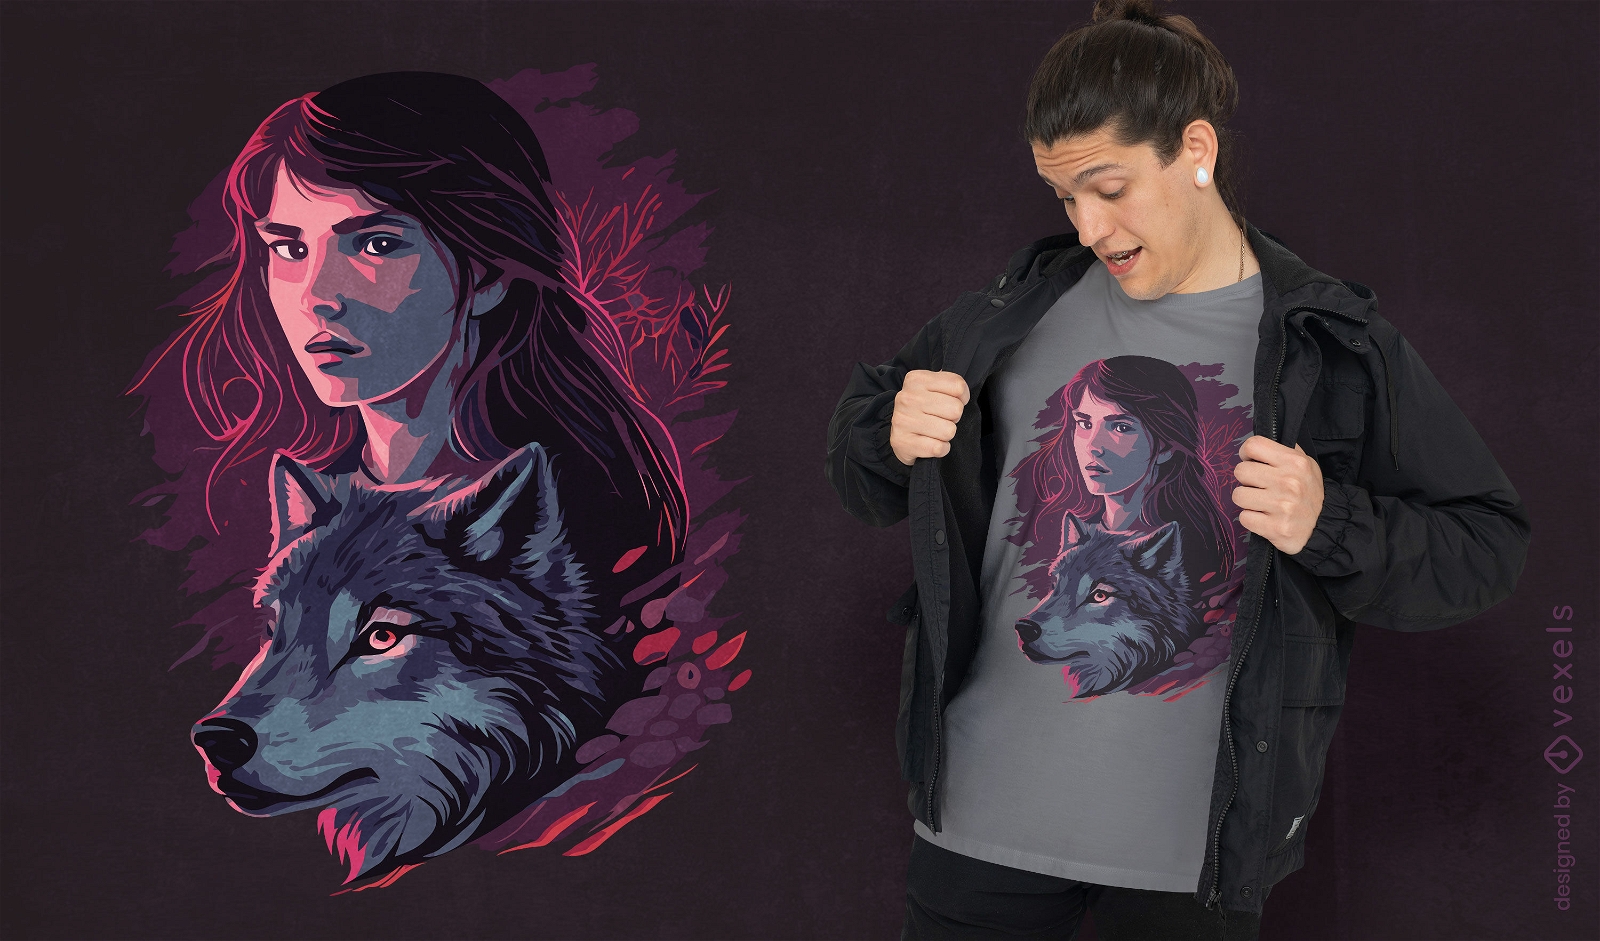 Diseño de camiseta animal niña y lobo.